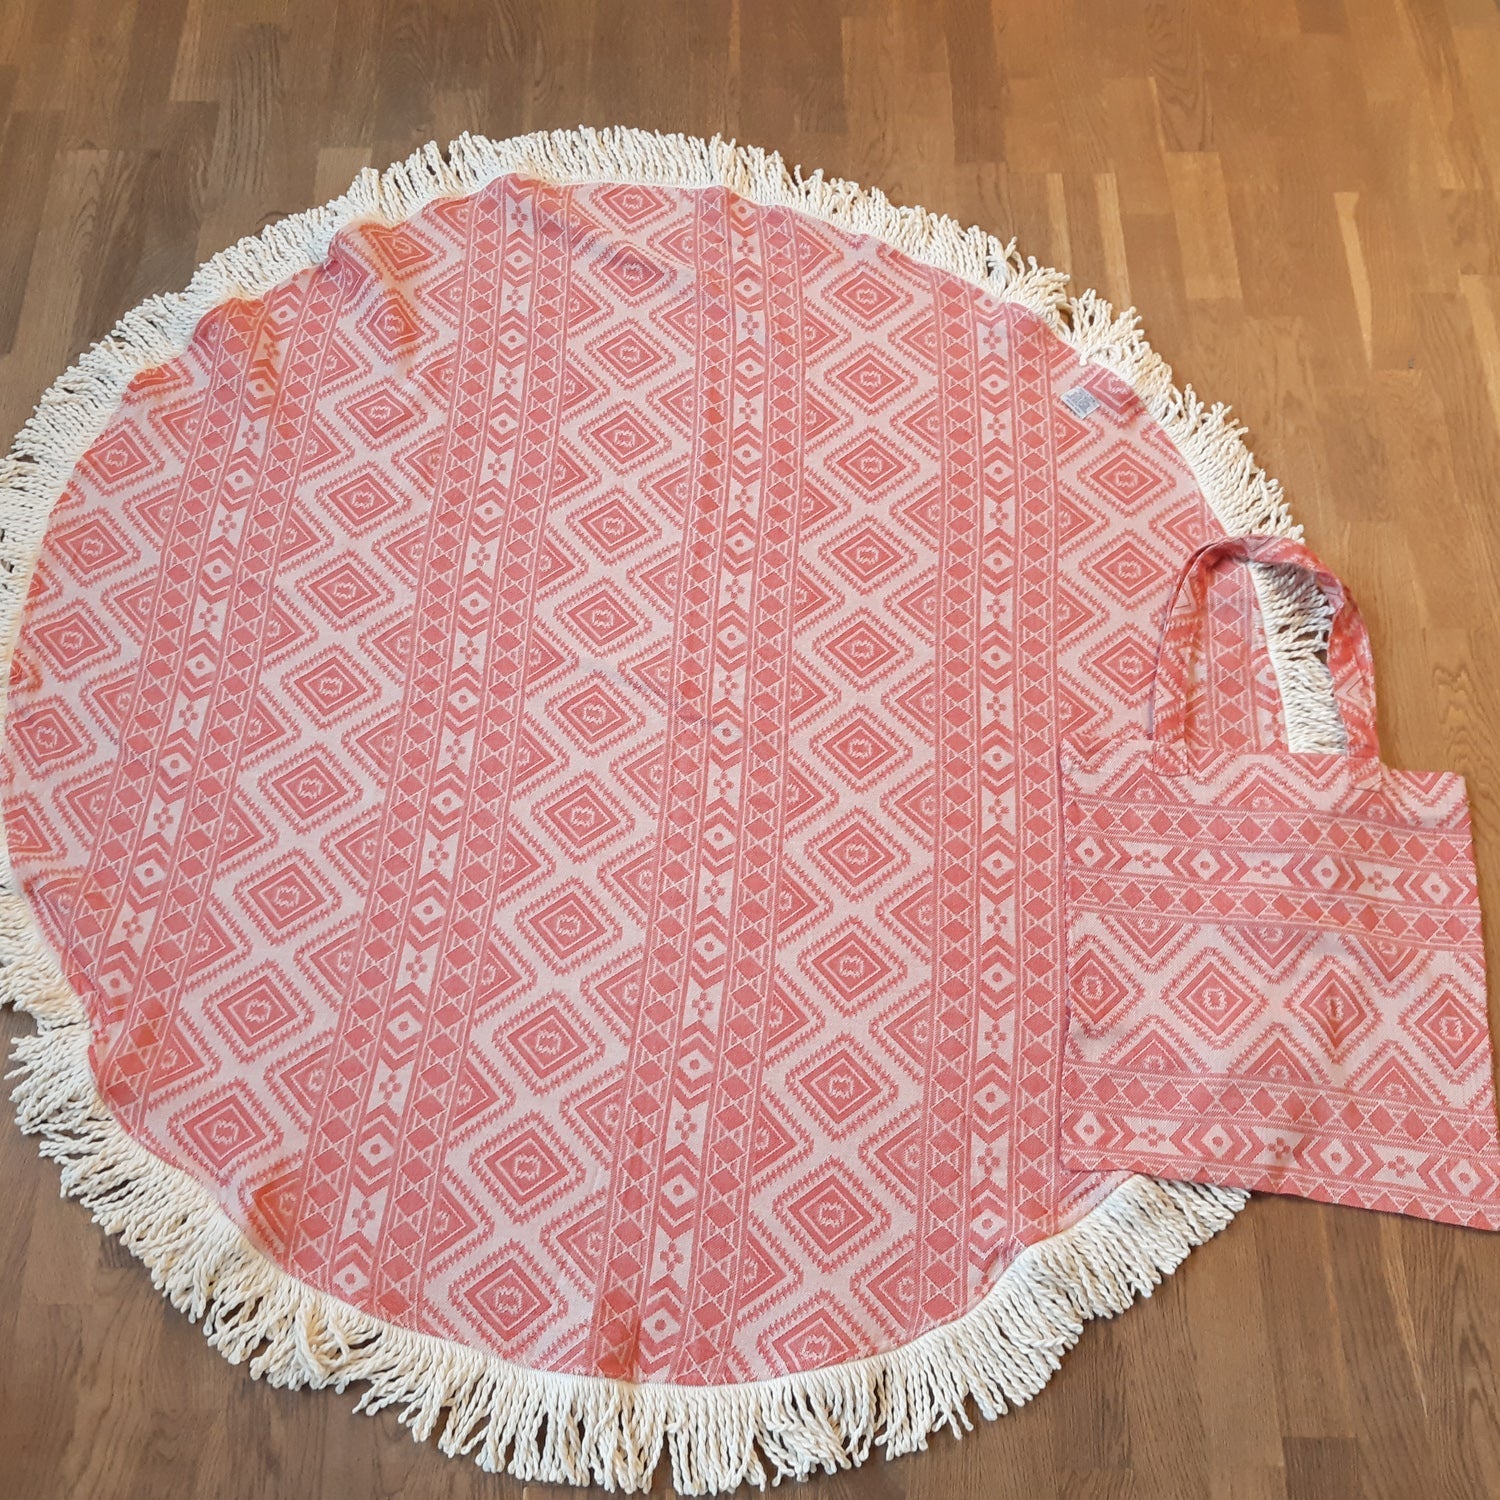 Blanket im Native-Design - Rot - Tücher